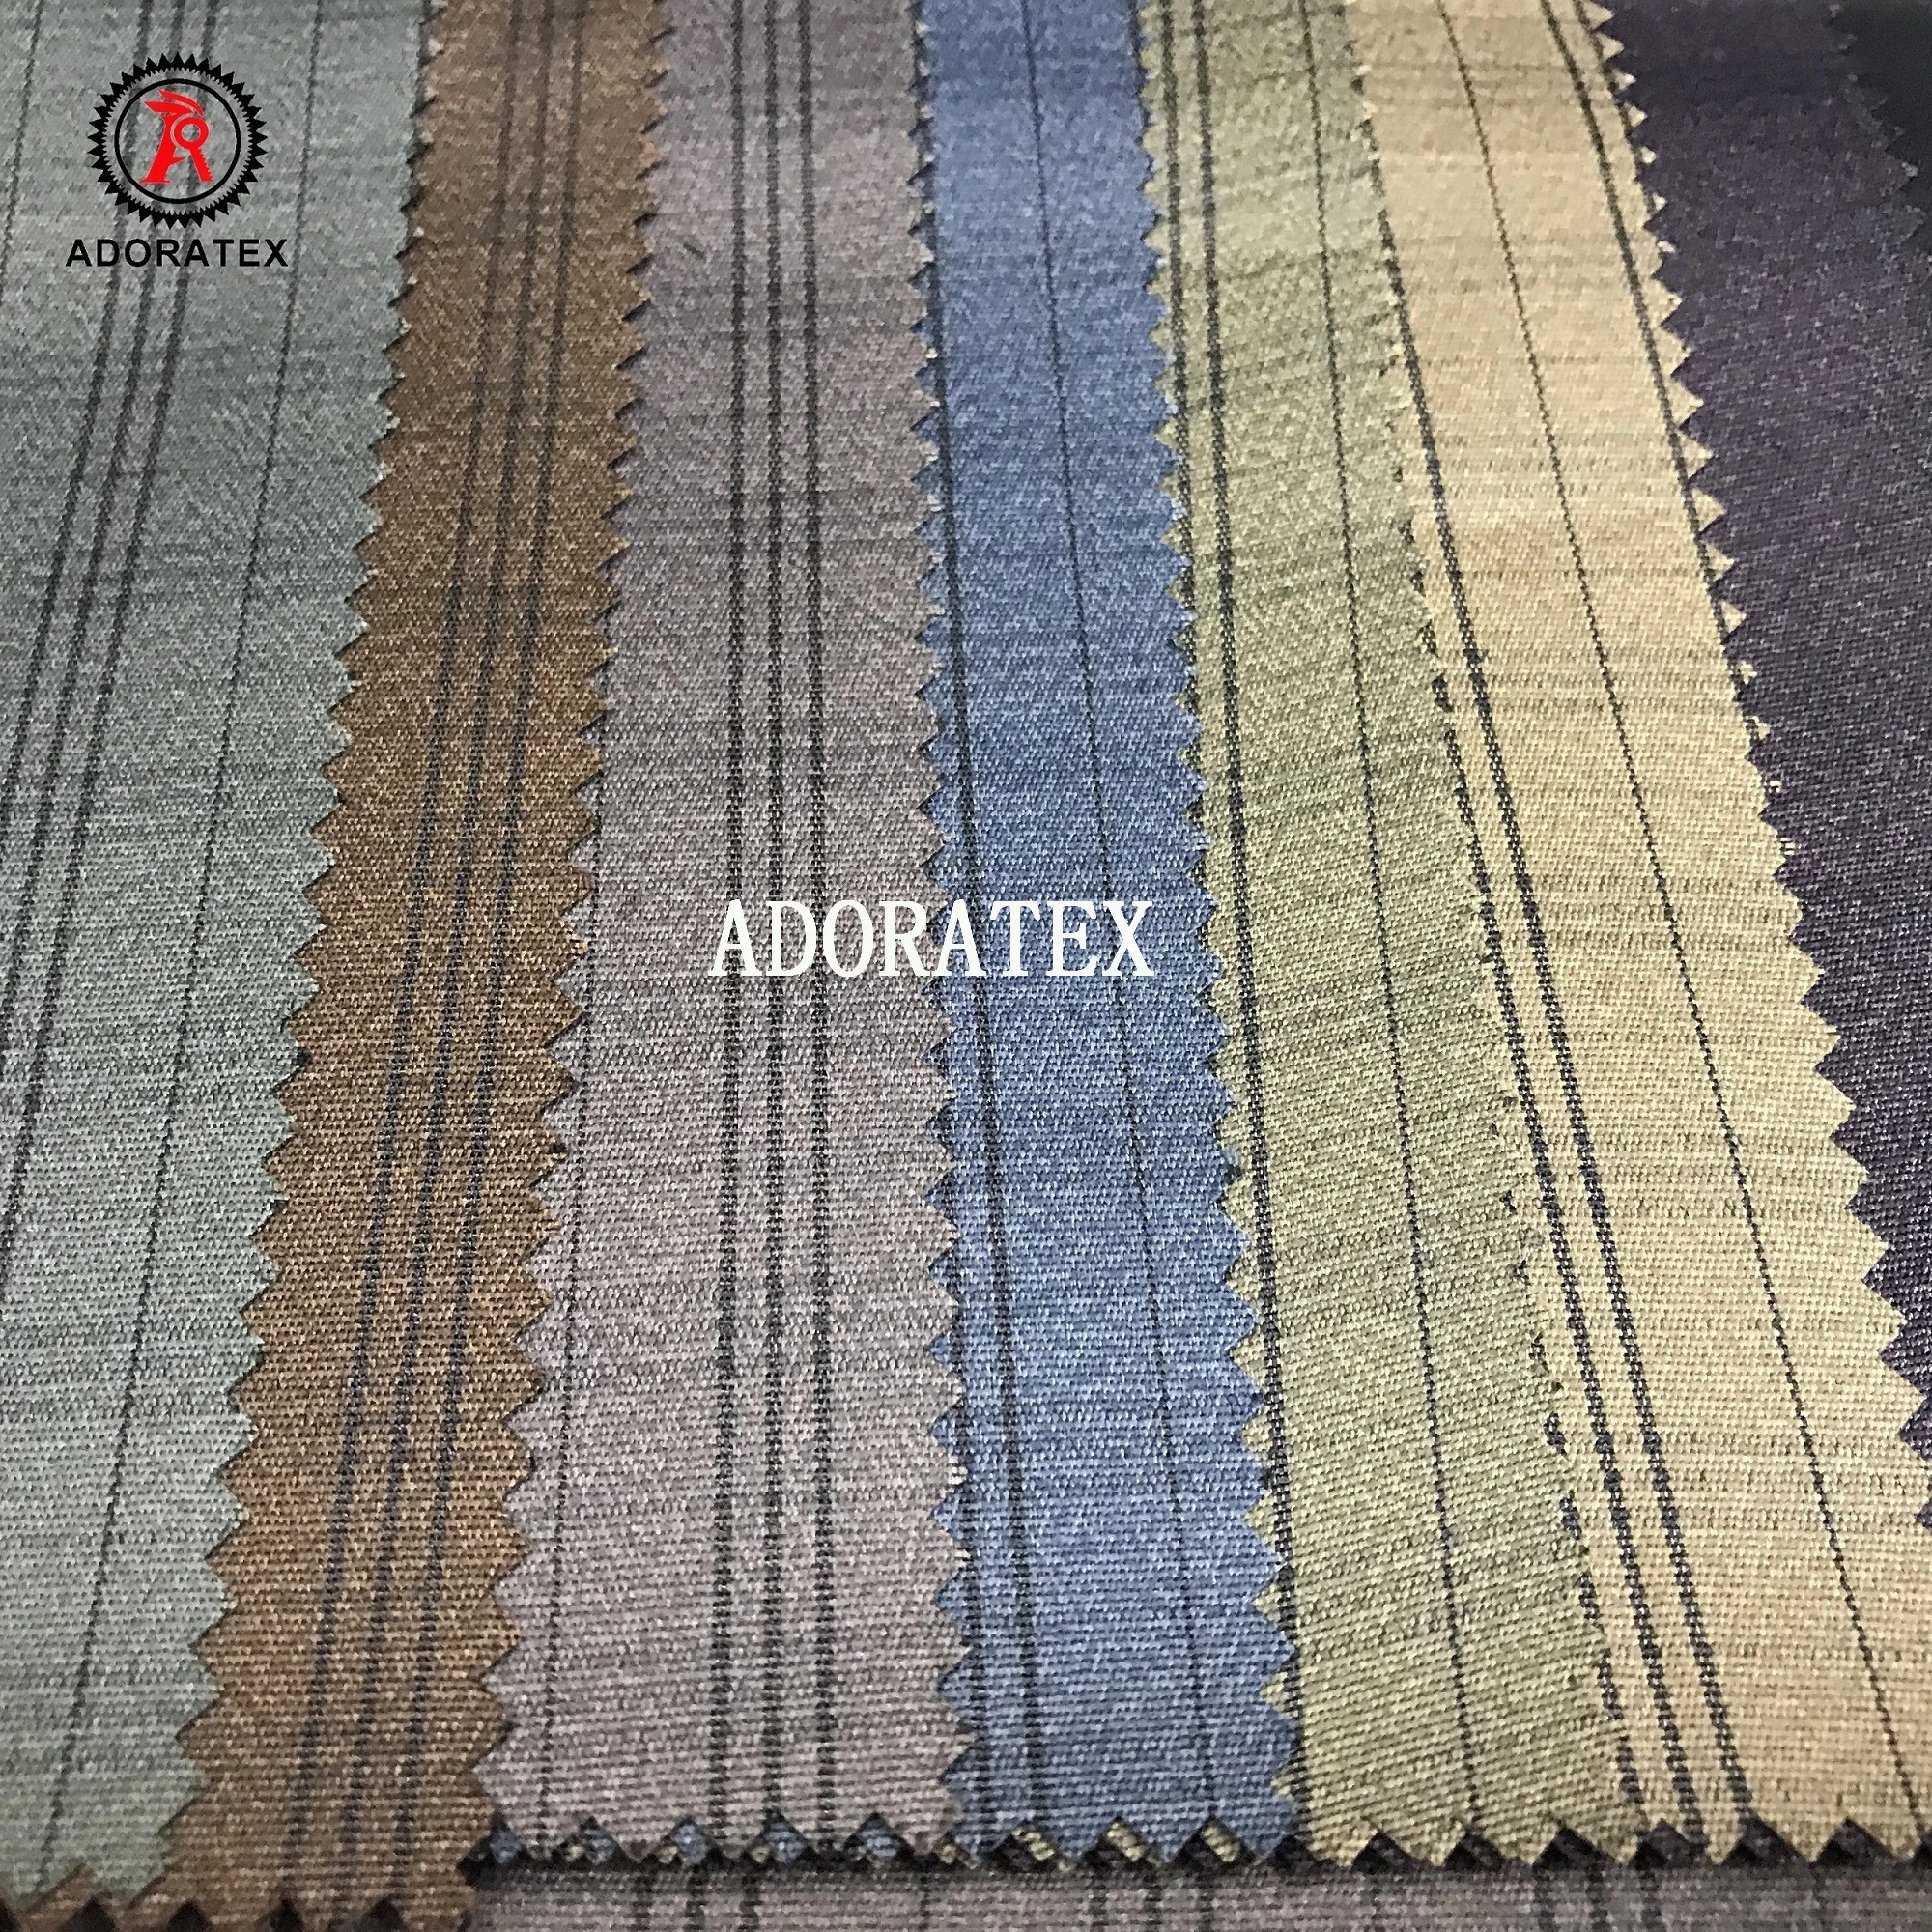 ADORATEX shining design viscose polyester tweed fabric